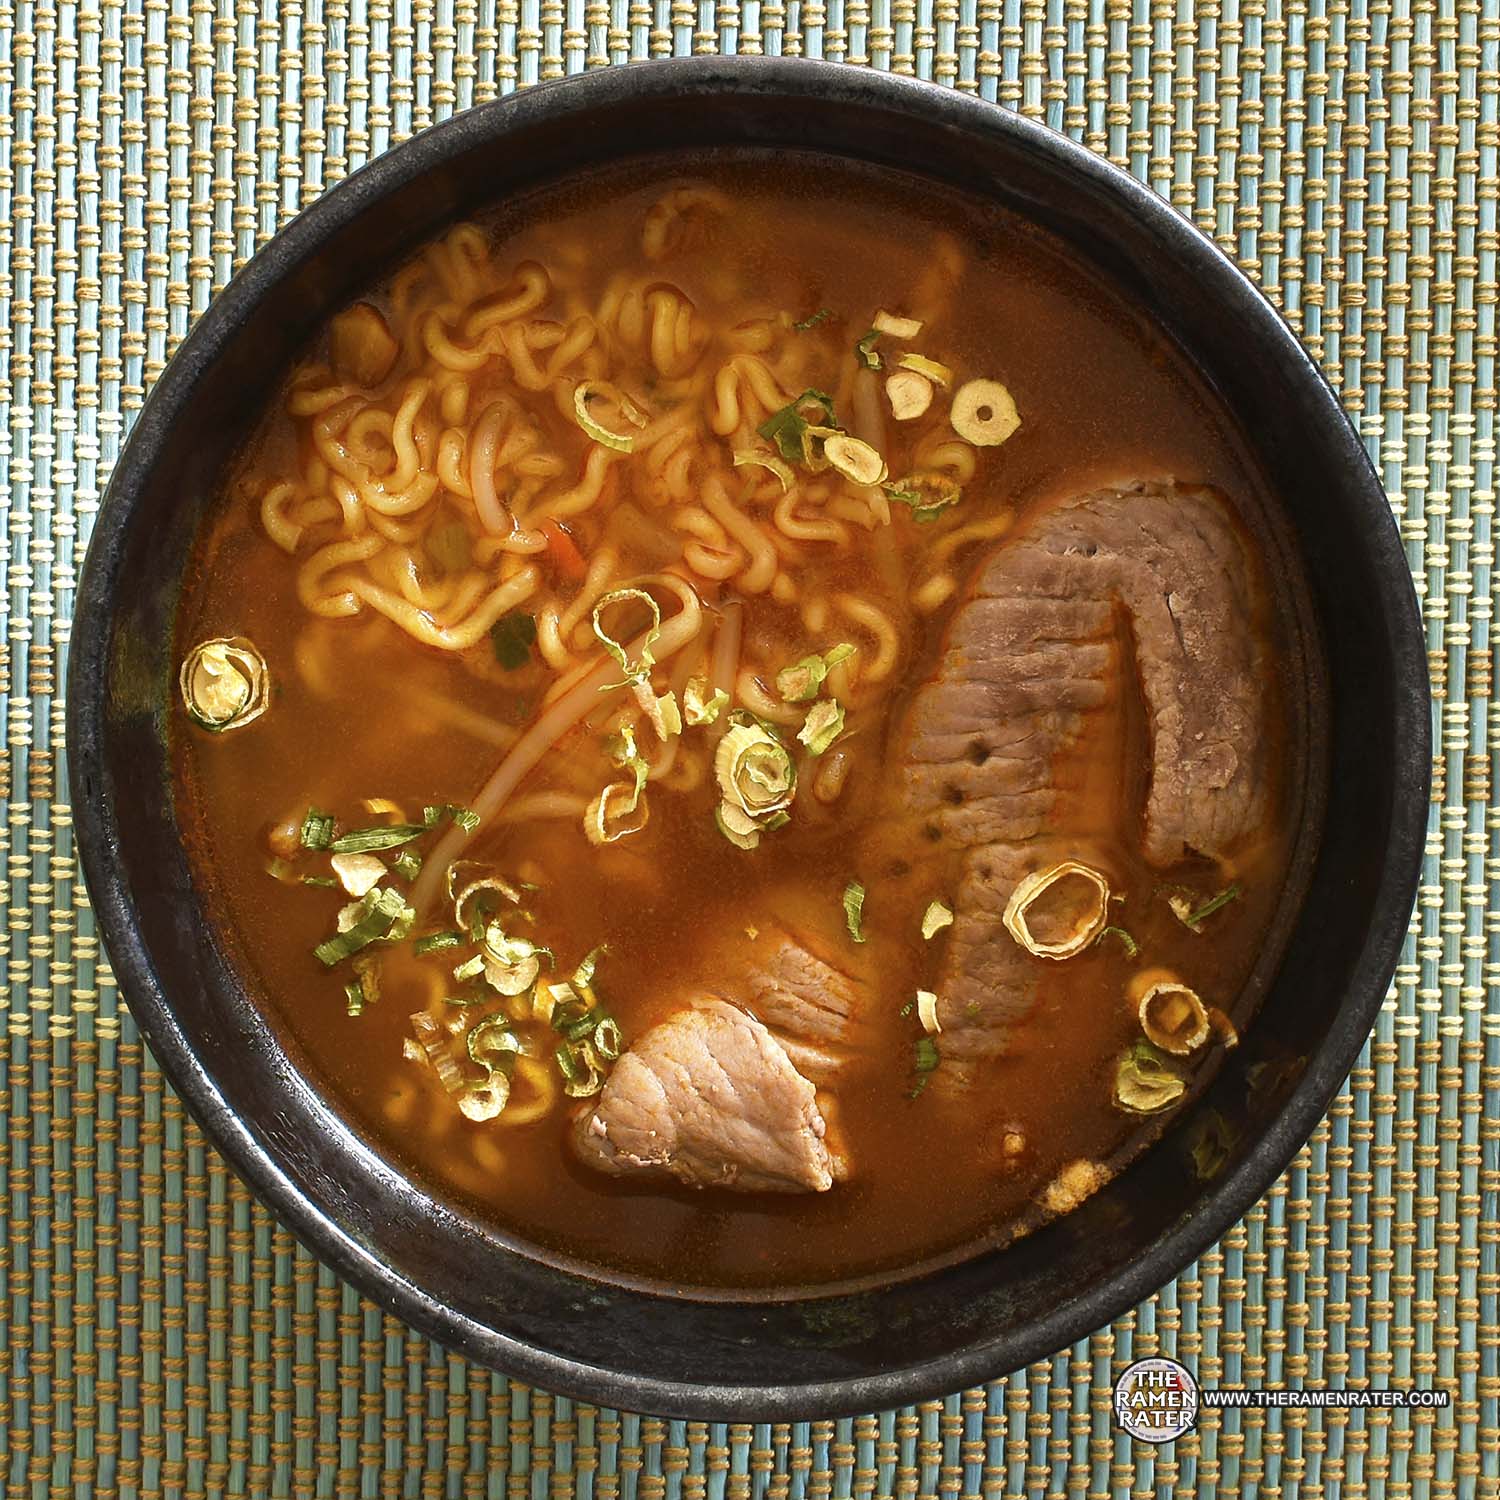  Korea Noodle Pot/Hot Shin Ramyun Aluminum Pot 6.3(16cm)/  Traditional HOT POT: Home & Kitchen